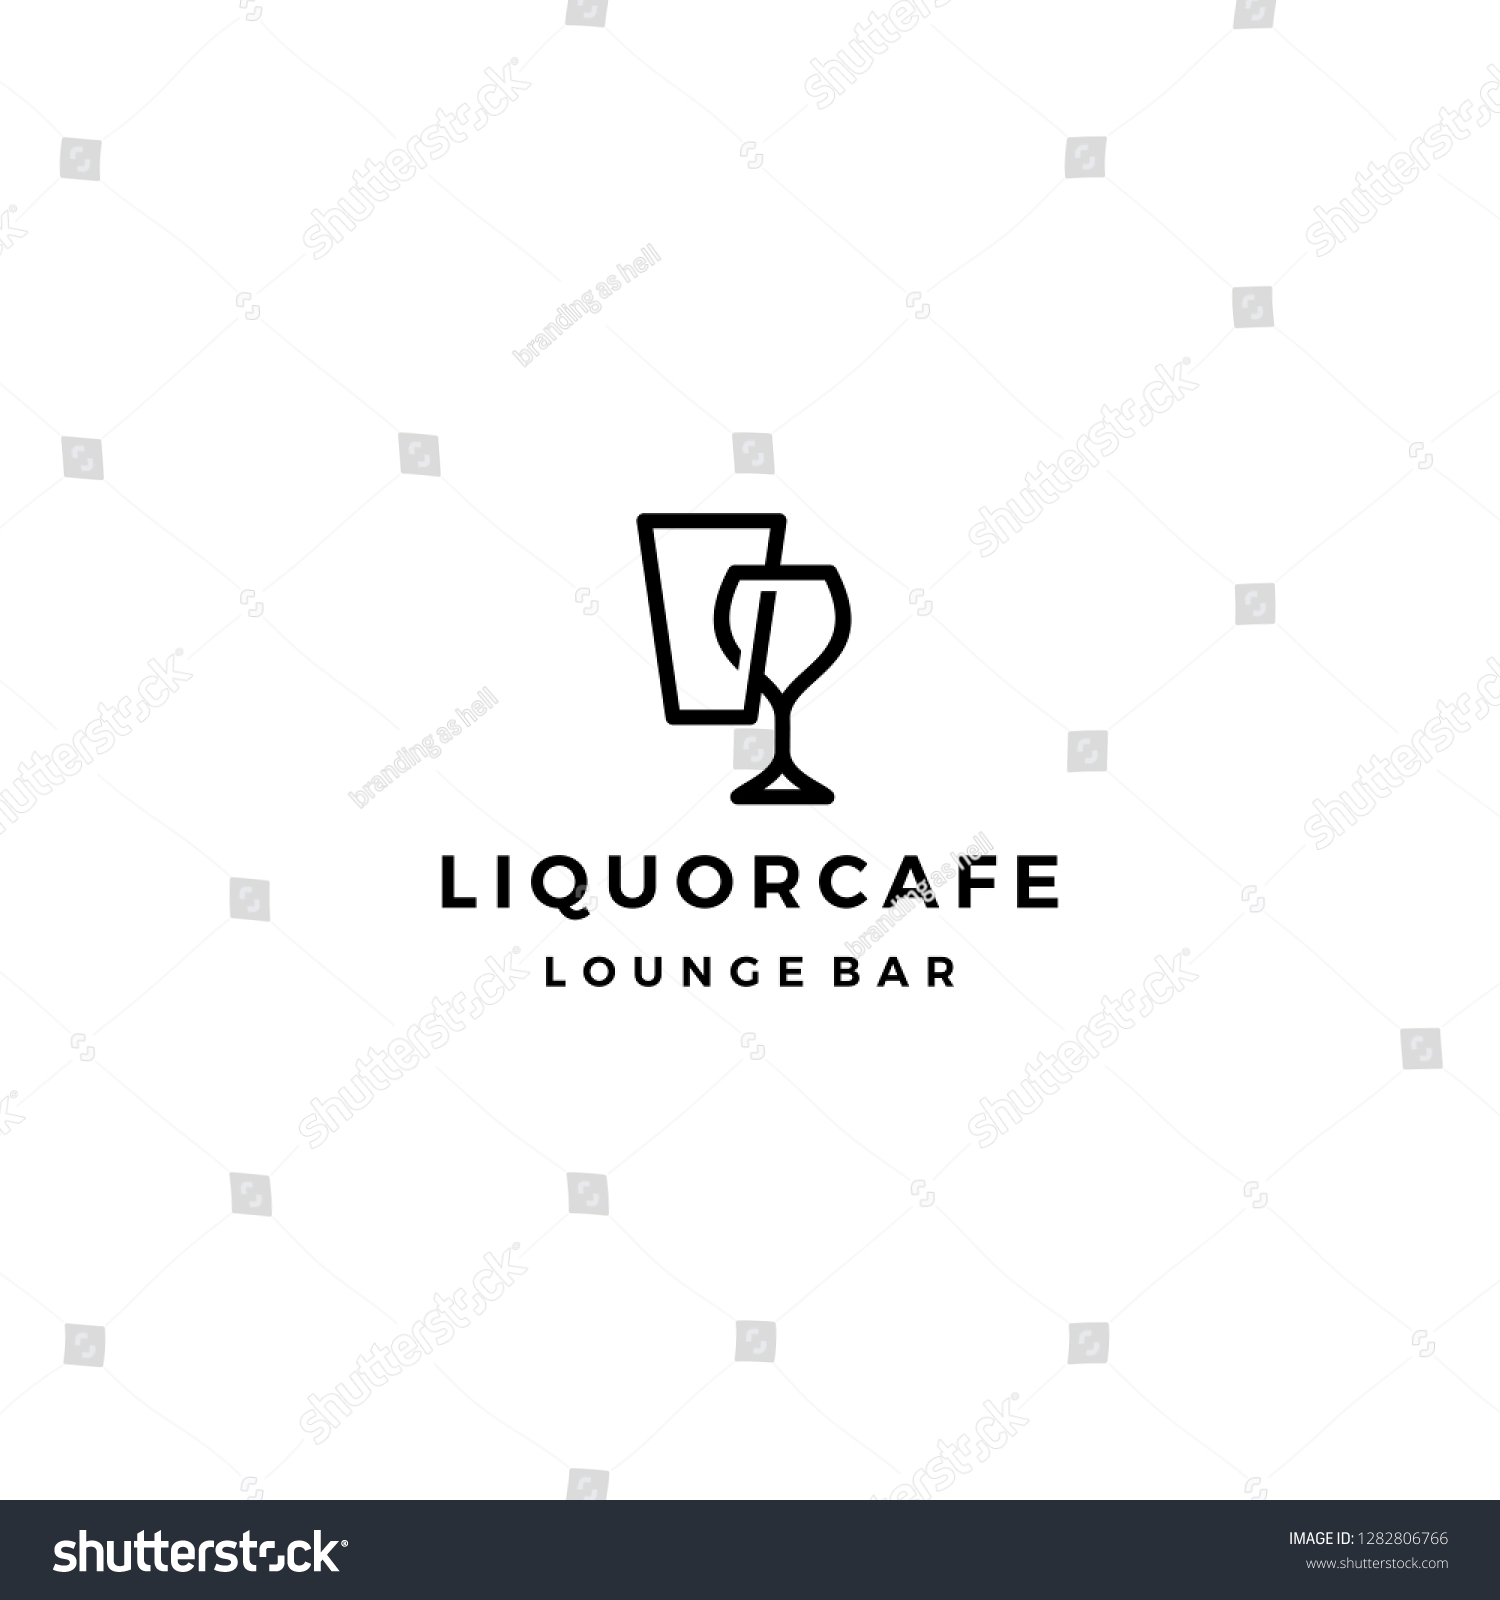  liquor store logo vector #1282806766